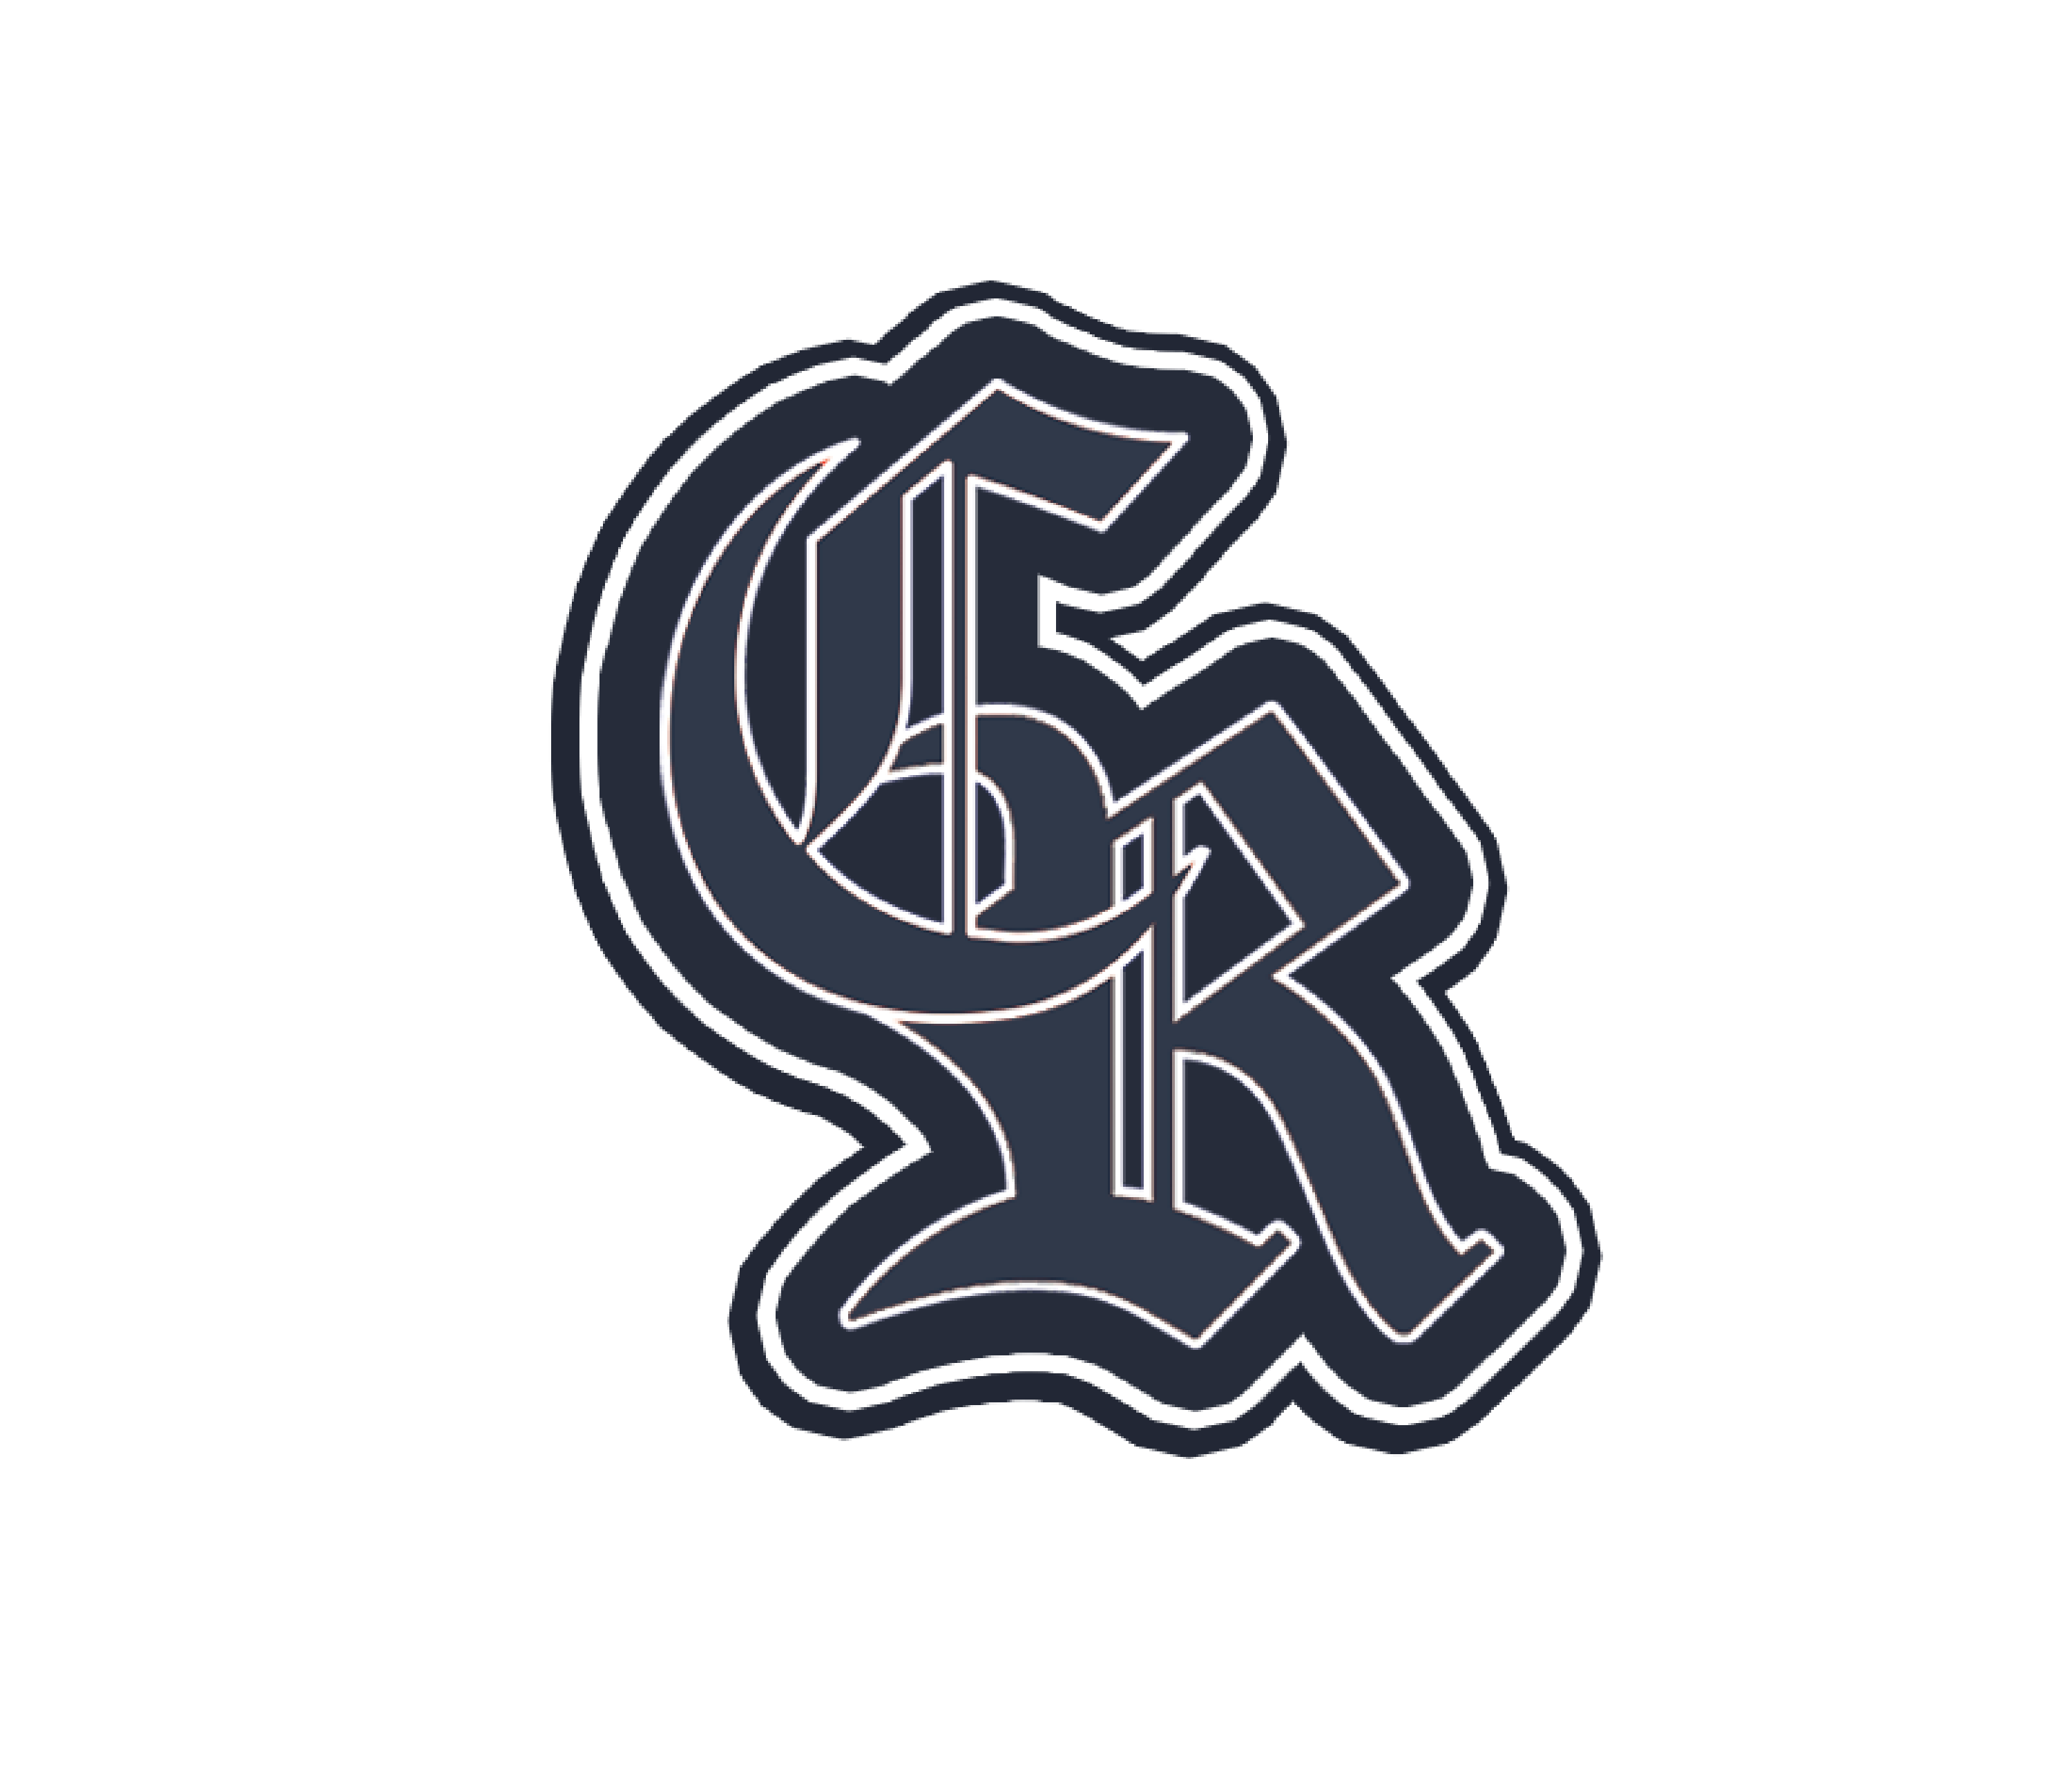 CAMP ROBERTS FIRE